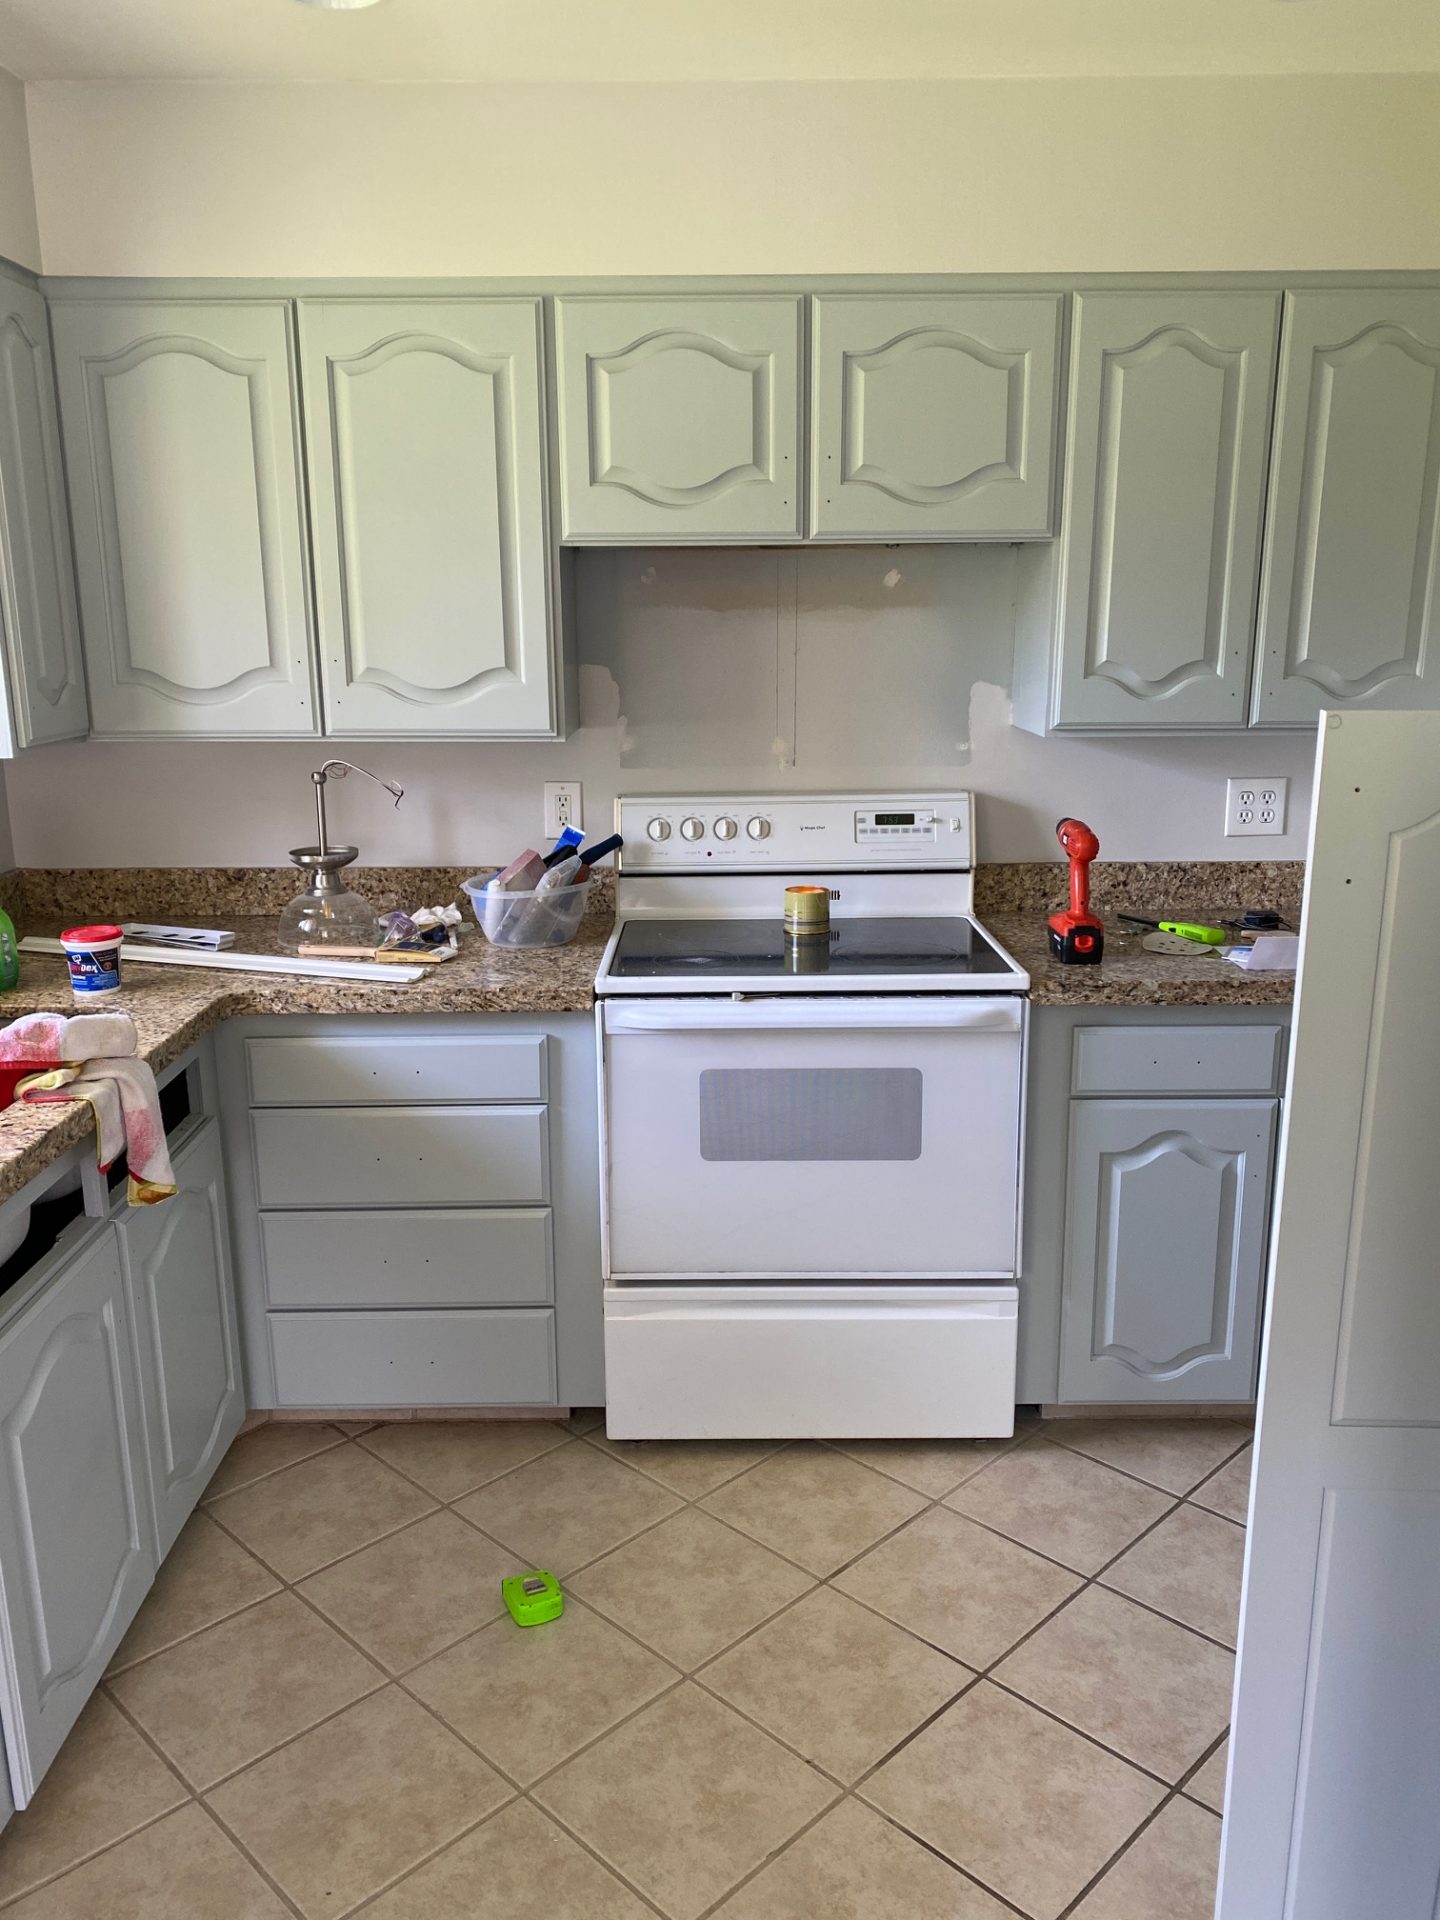 Kitchen Renovation by a Newbie DIYer - The Modern Dad